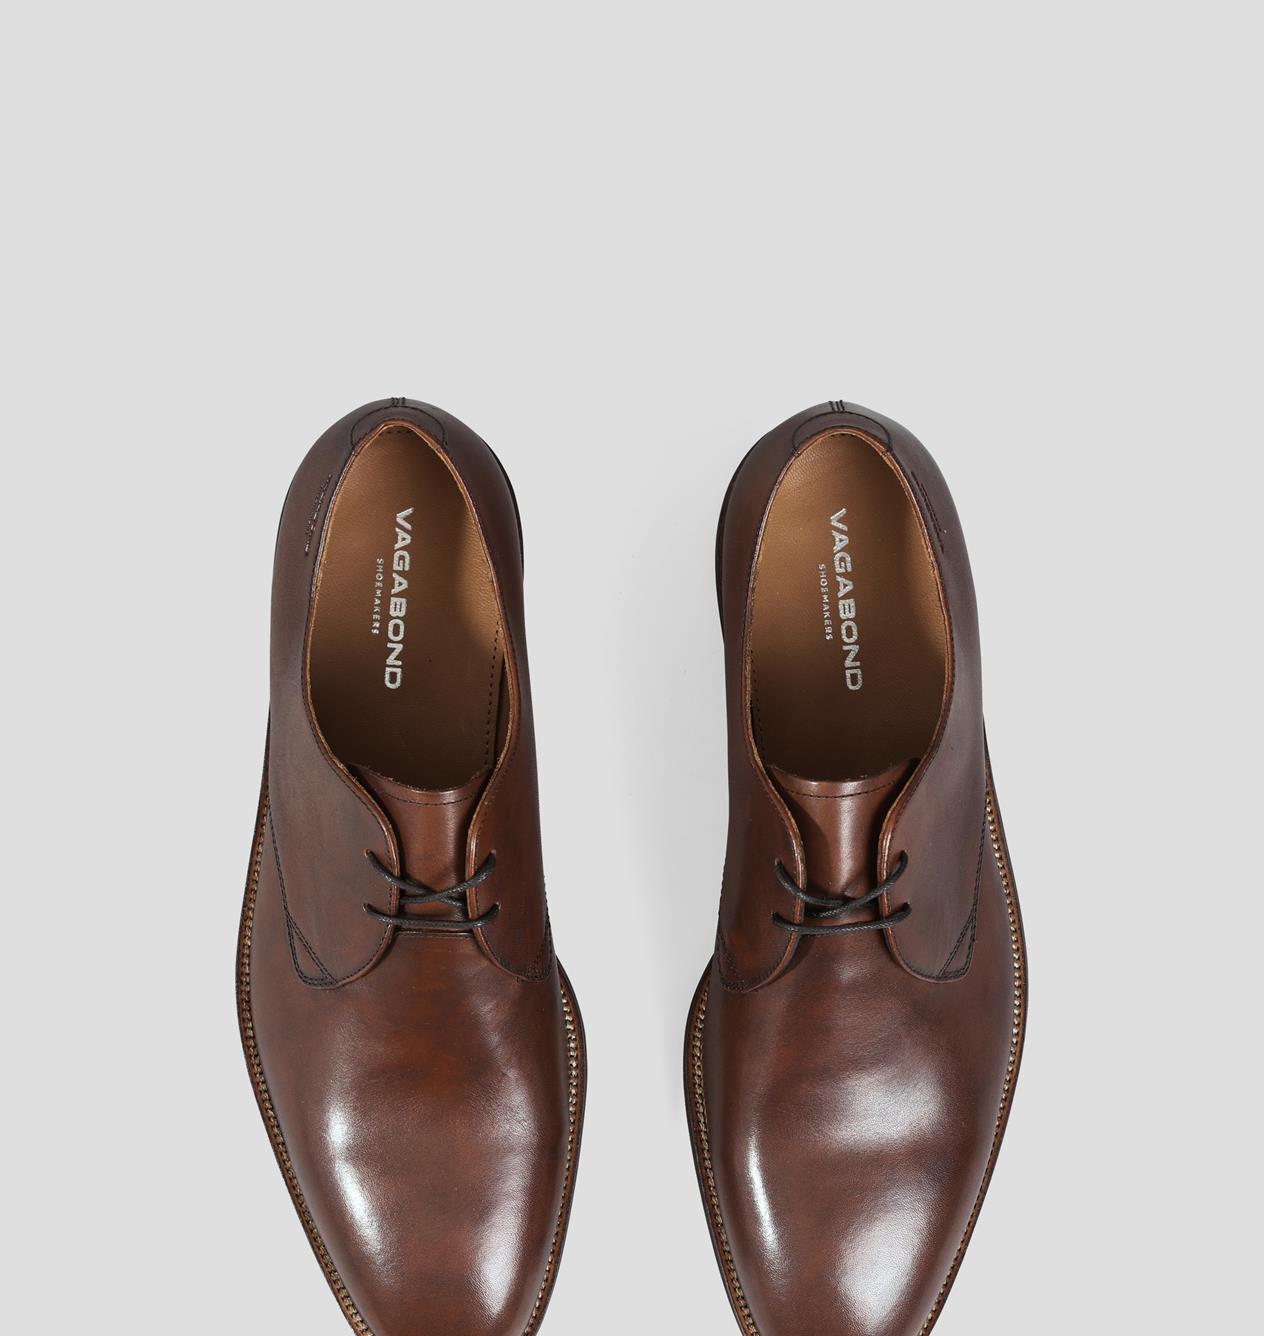 tag Rejse Generalife Percy - Brown Shoes Man | Vagabond